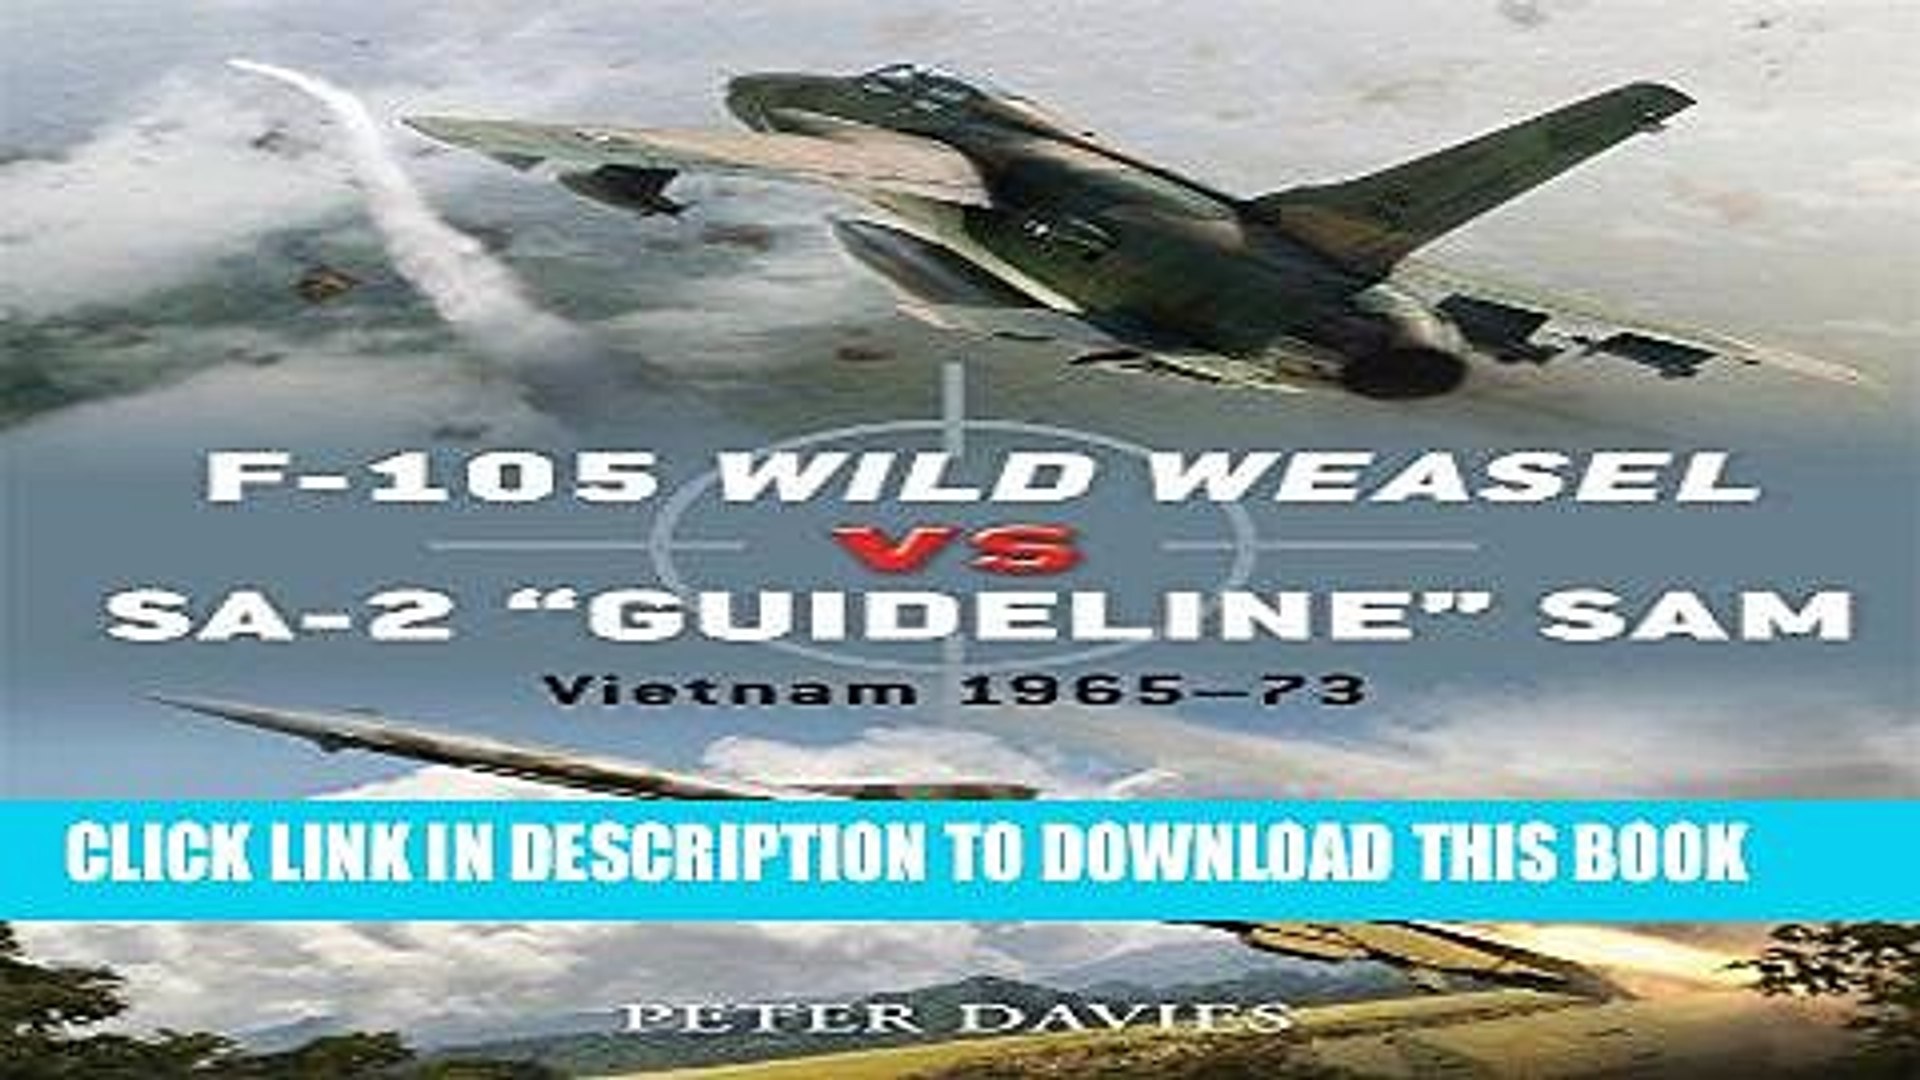 Read Now F 105 Wild Weasel Vs Sa 2 Guideline Sam Vietnam 1965 73 Duel Pdf Book - 